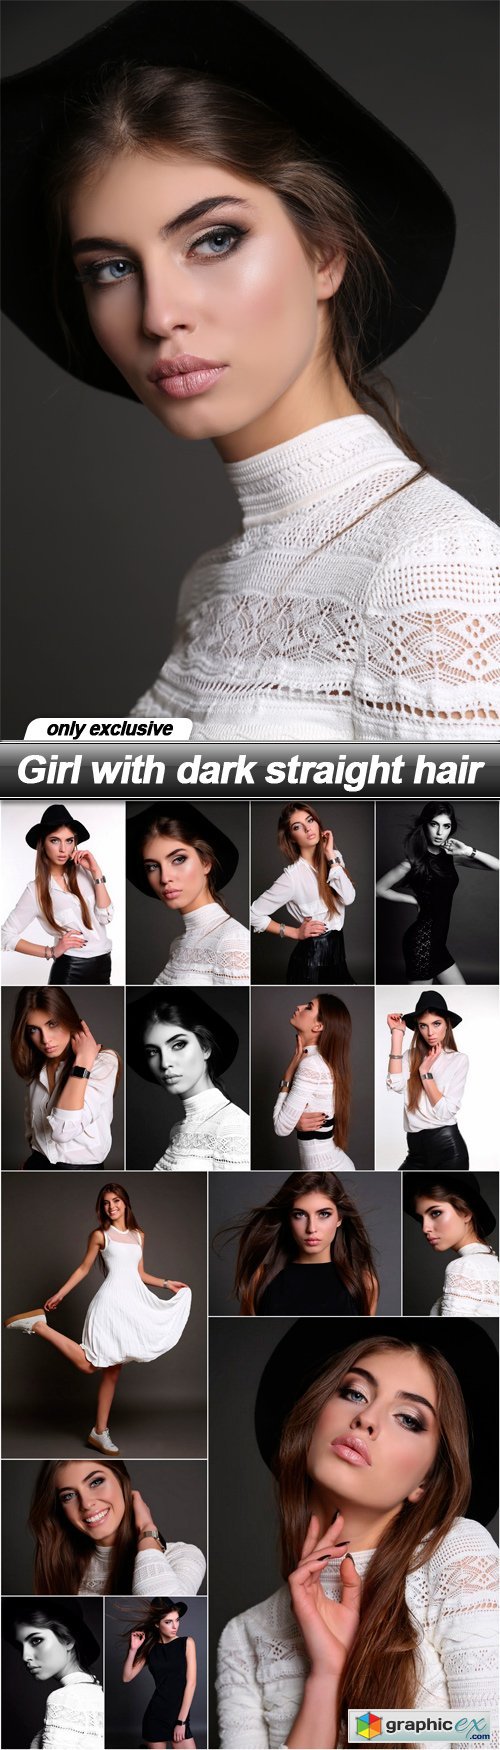 Girl with dark straight hair - 15 UHQ JPEG